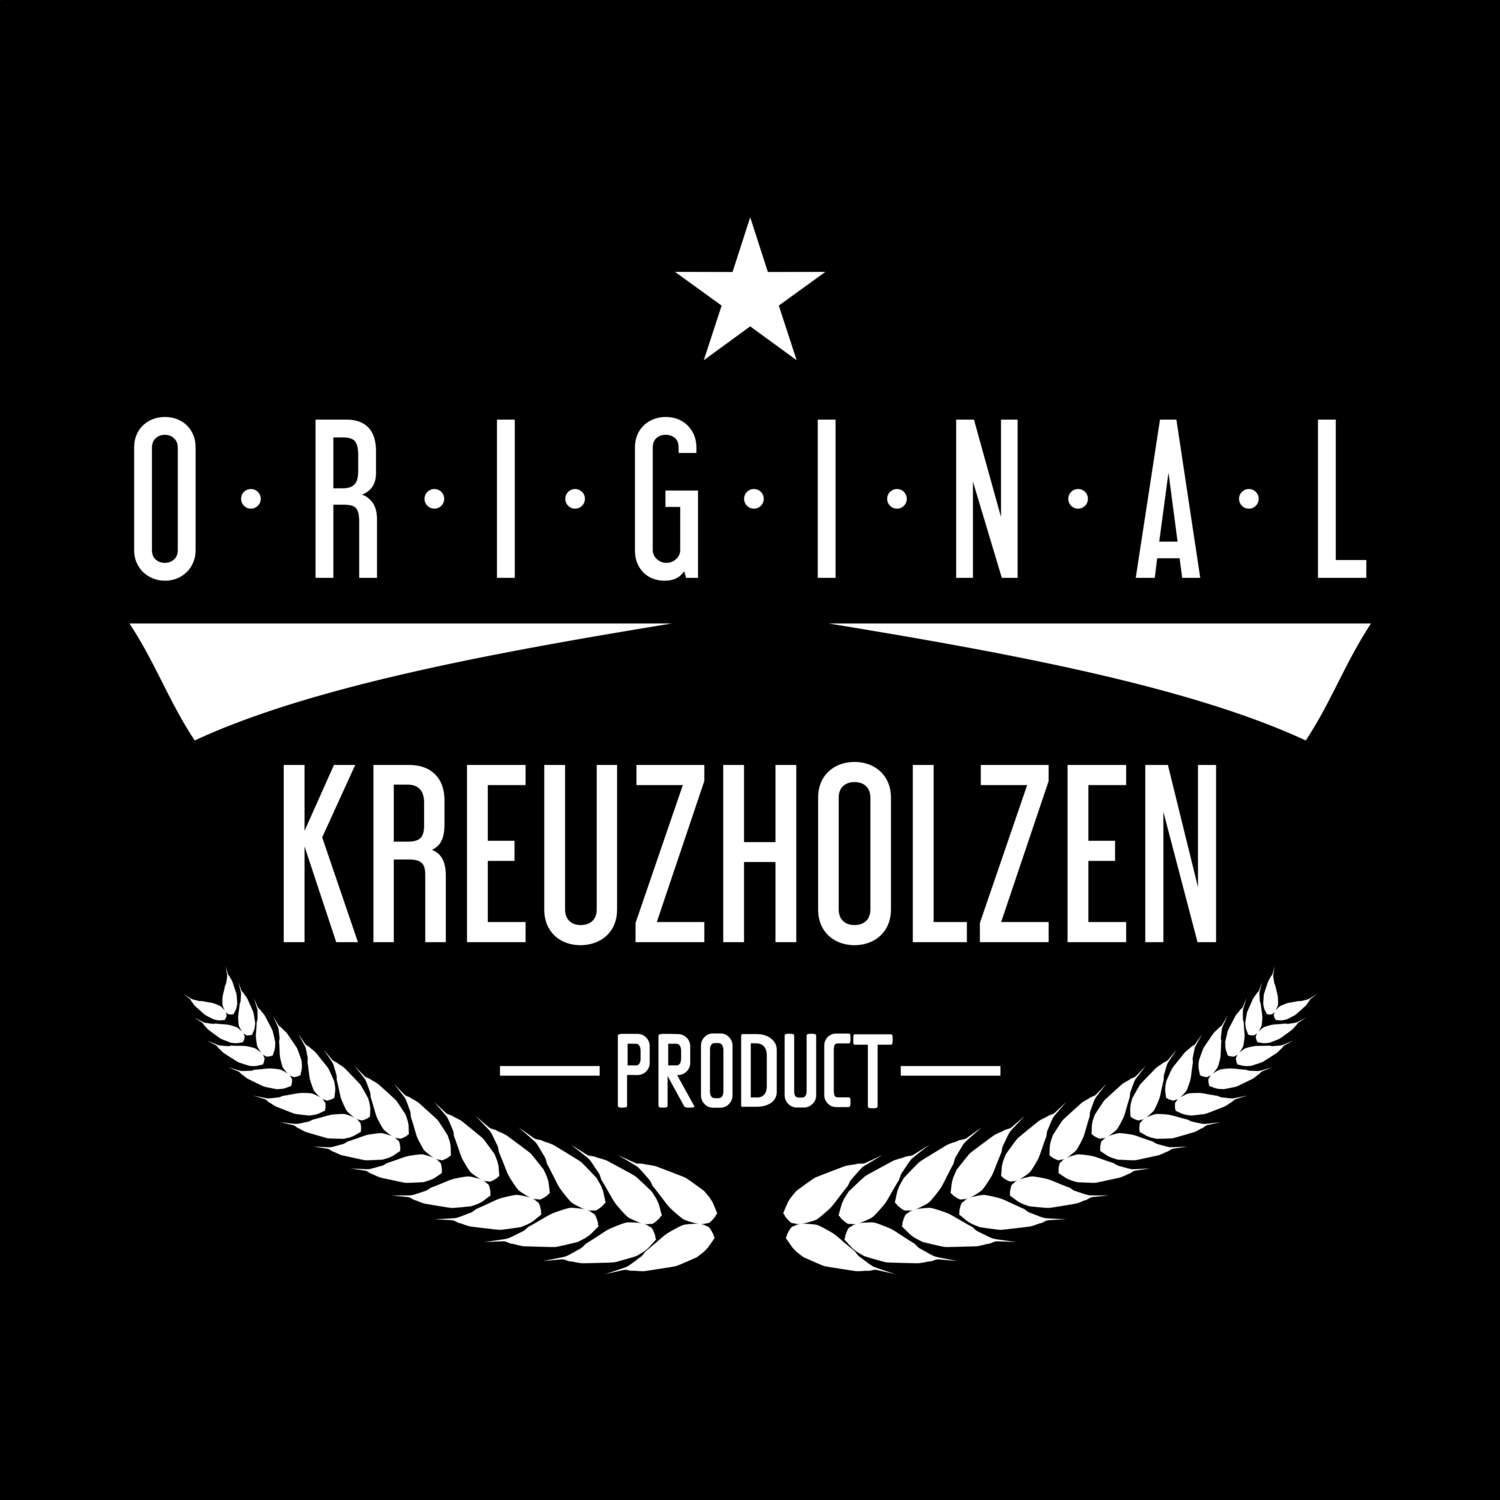 Kreuzholzen T-Shirt »Original Product«